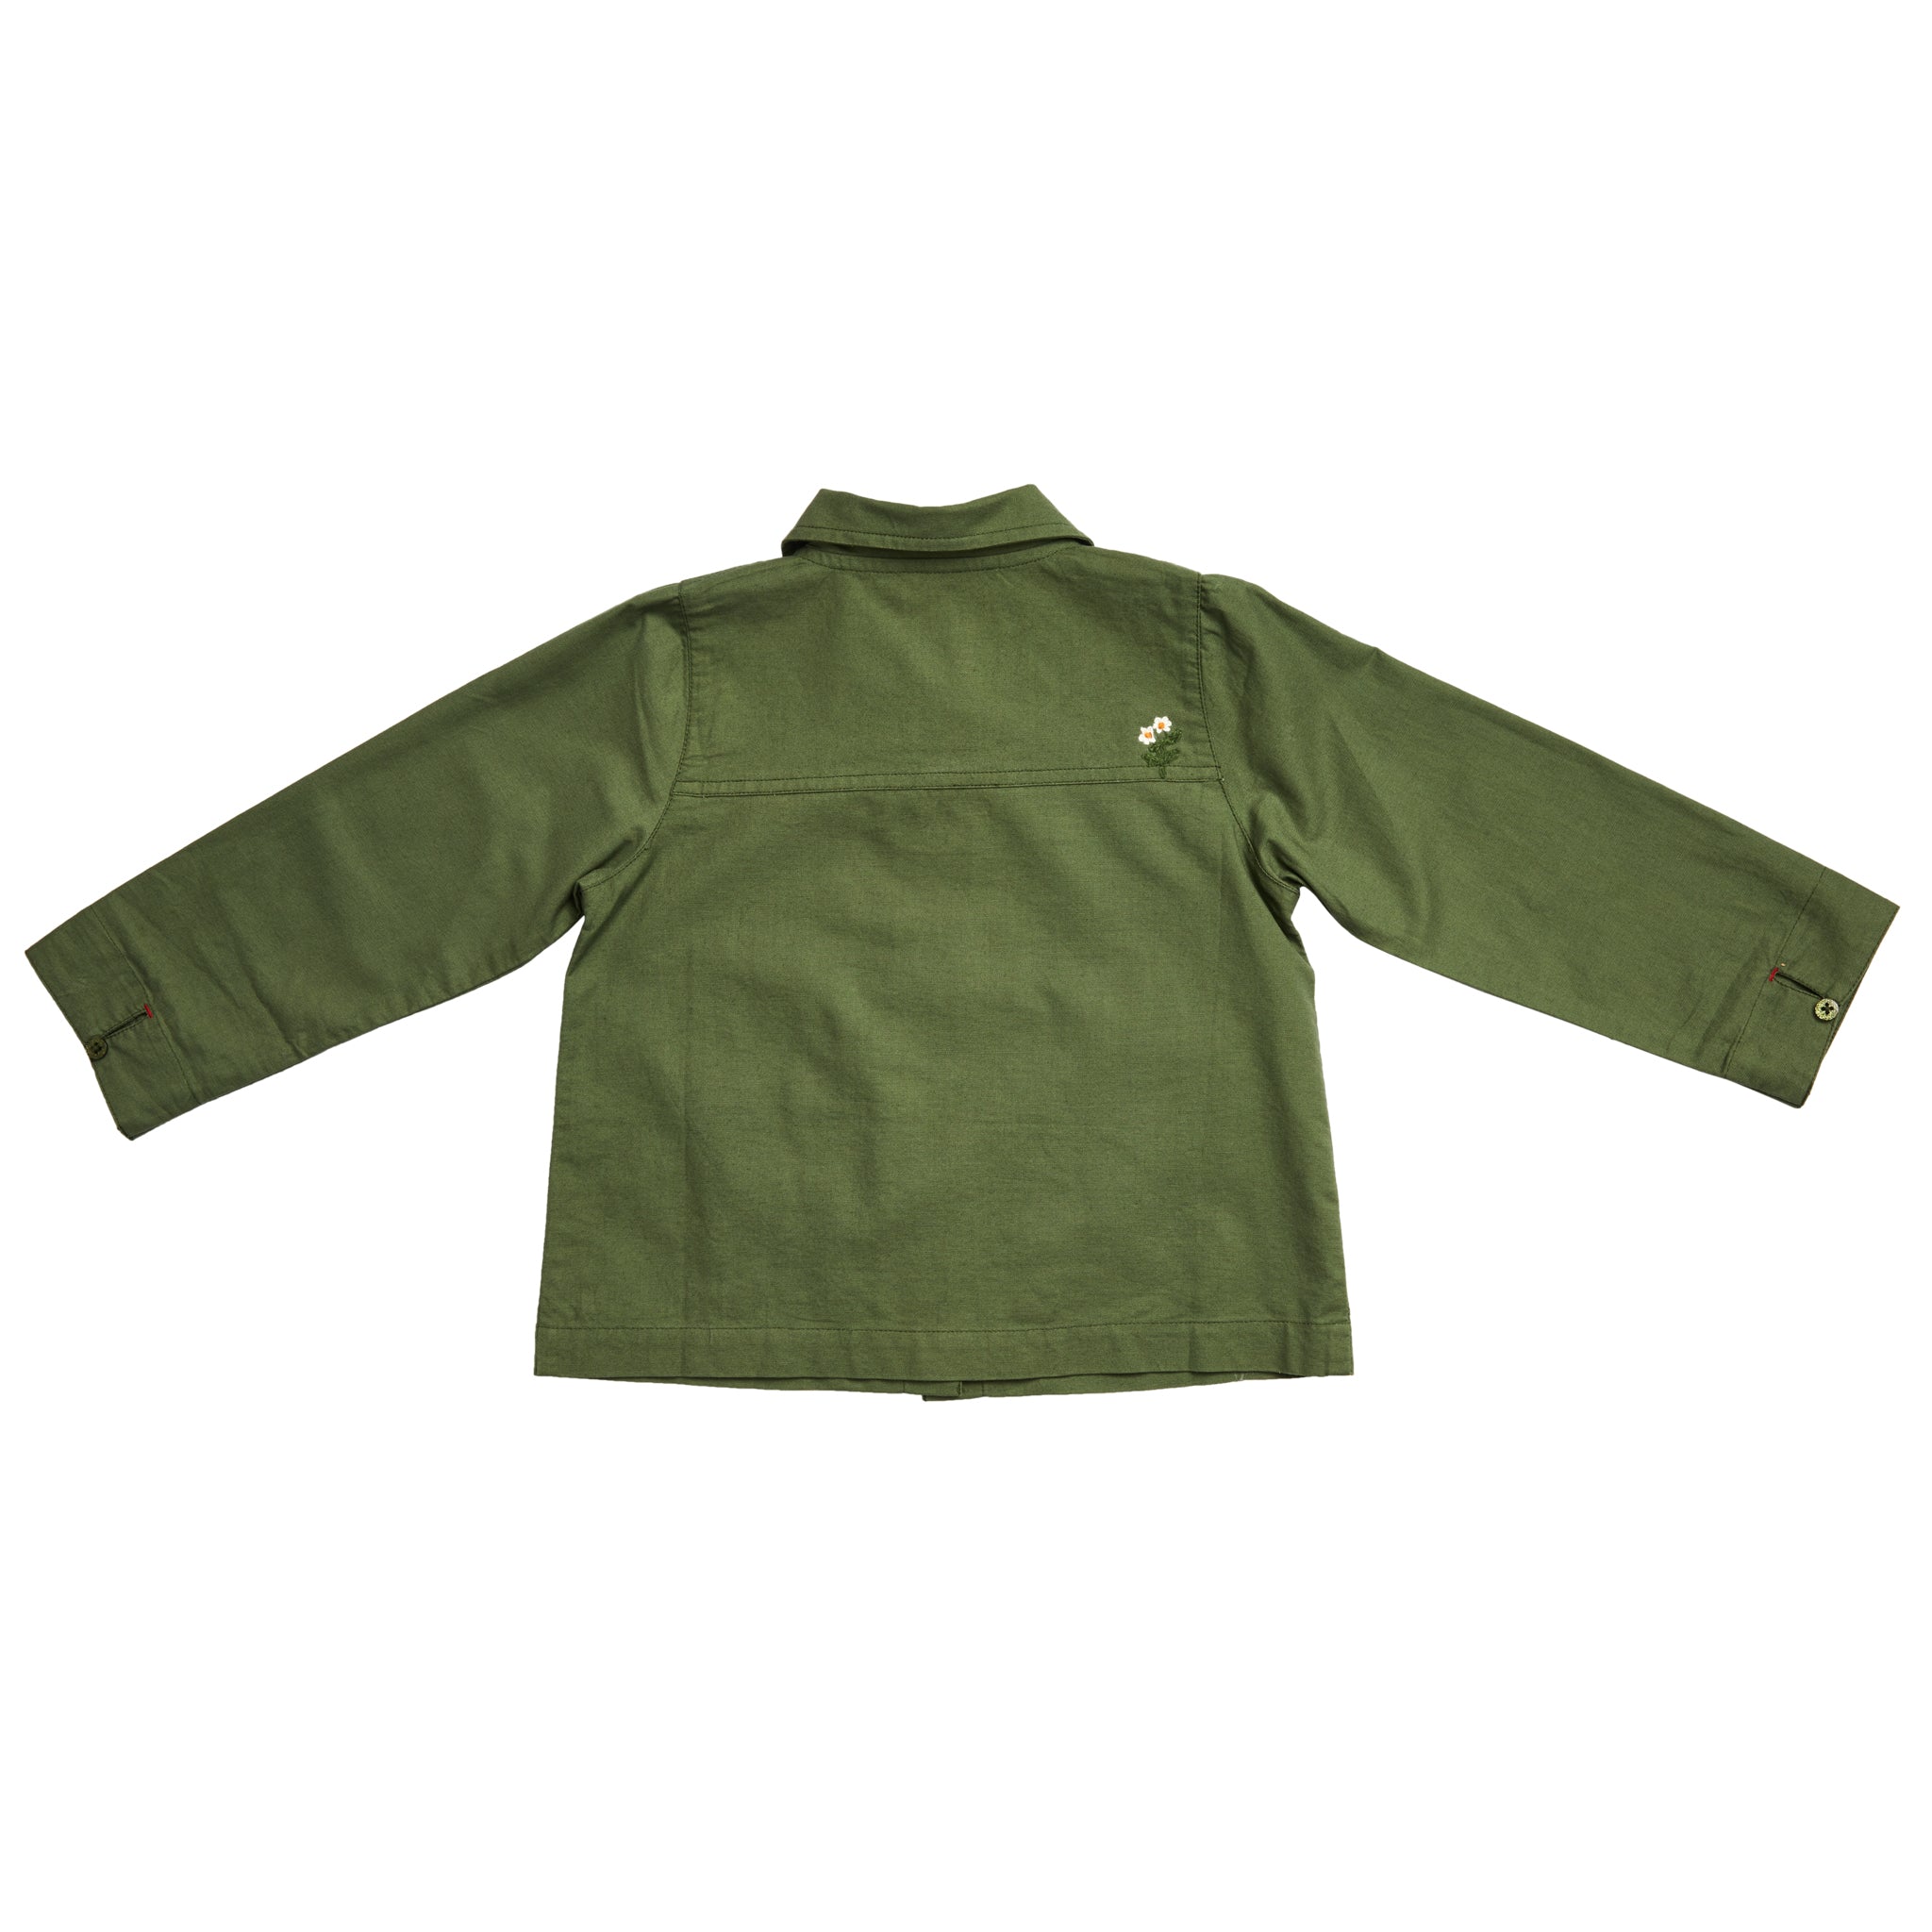 Four Leaf Clover Army Jacket